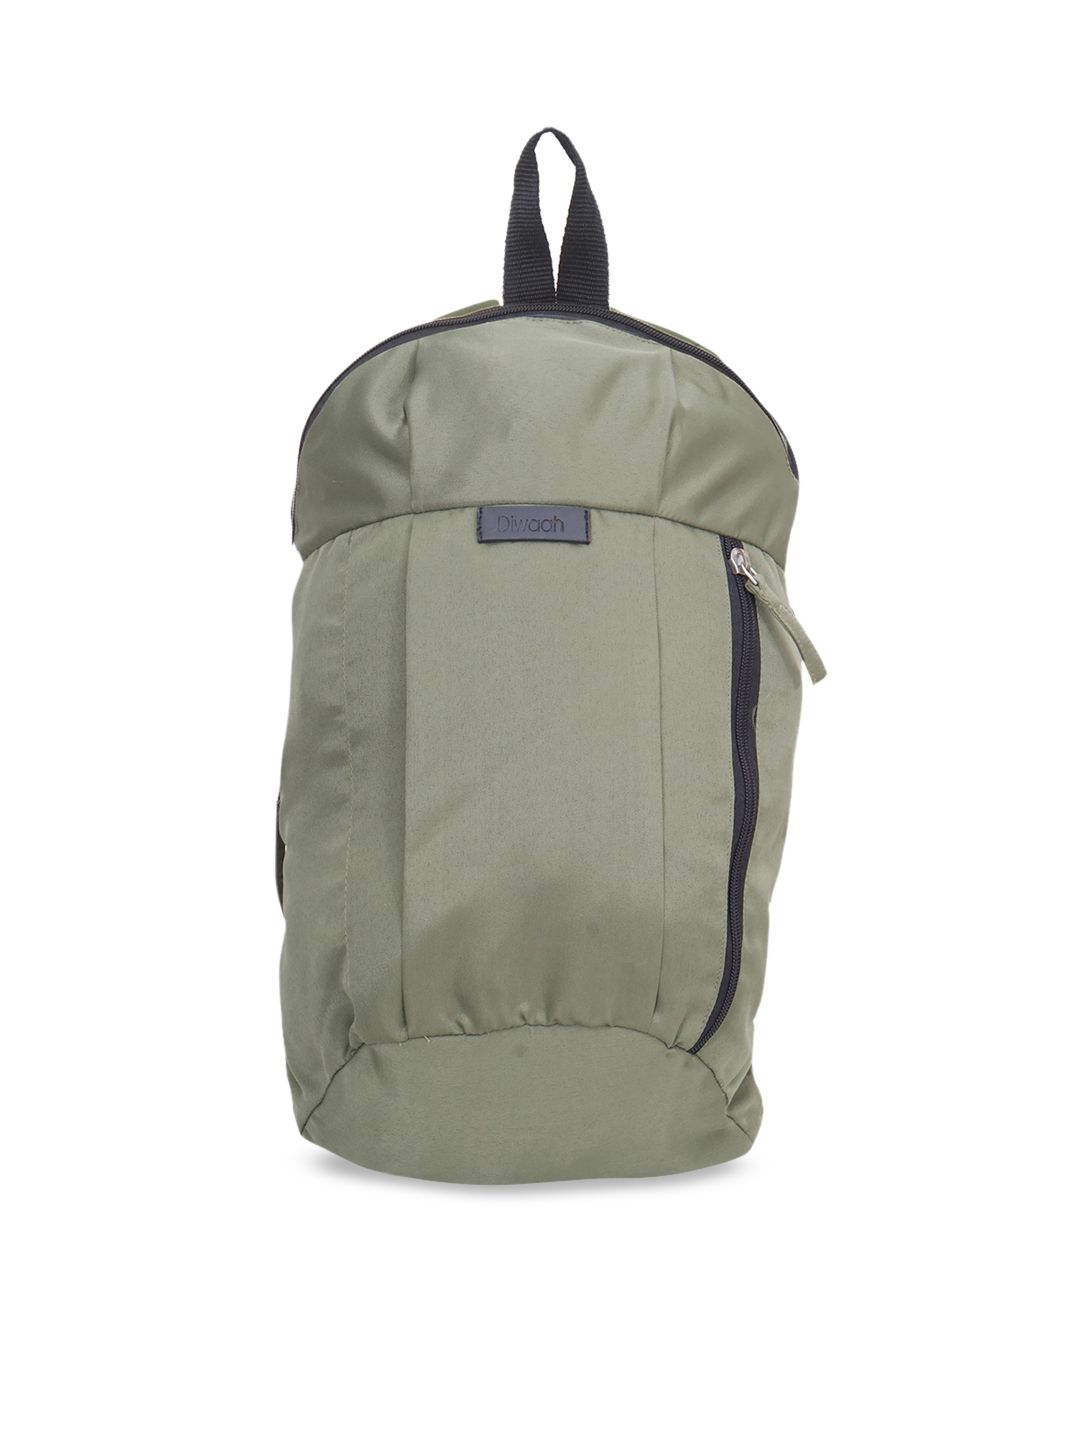 Diwaah Unisex Green Solid Backpack Price in India